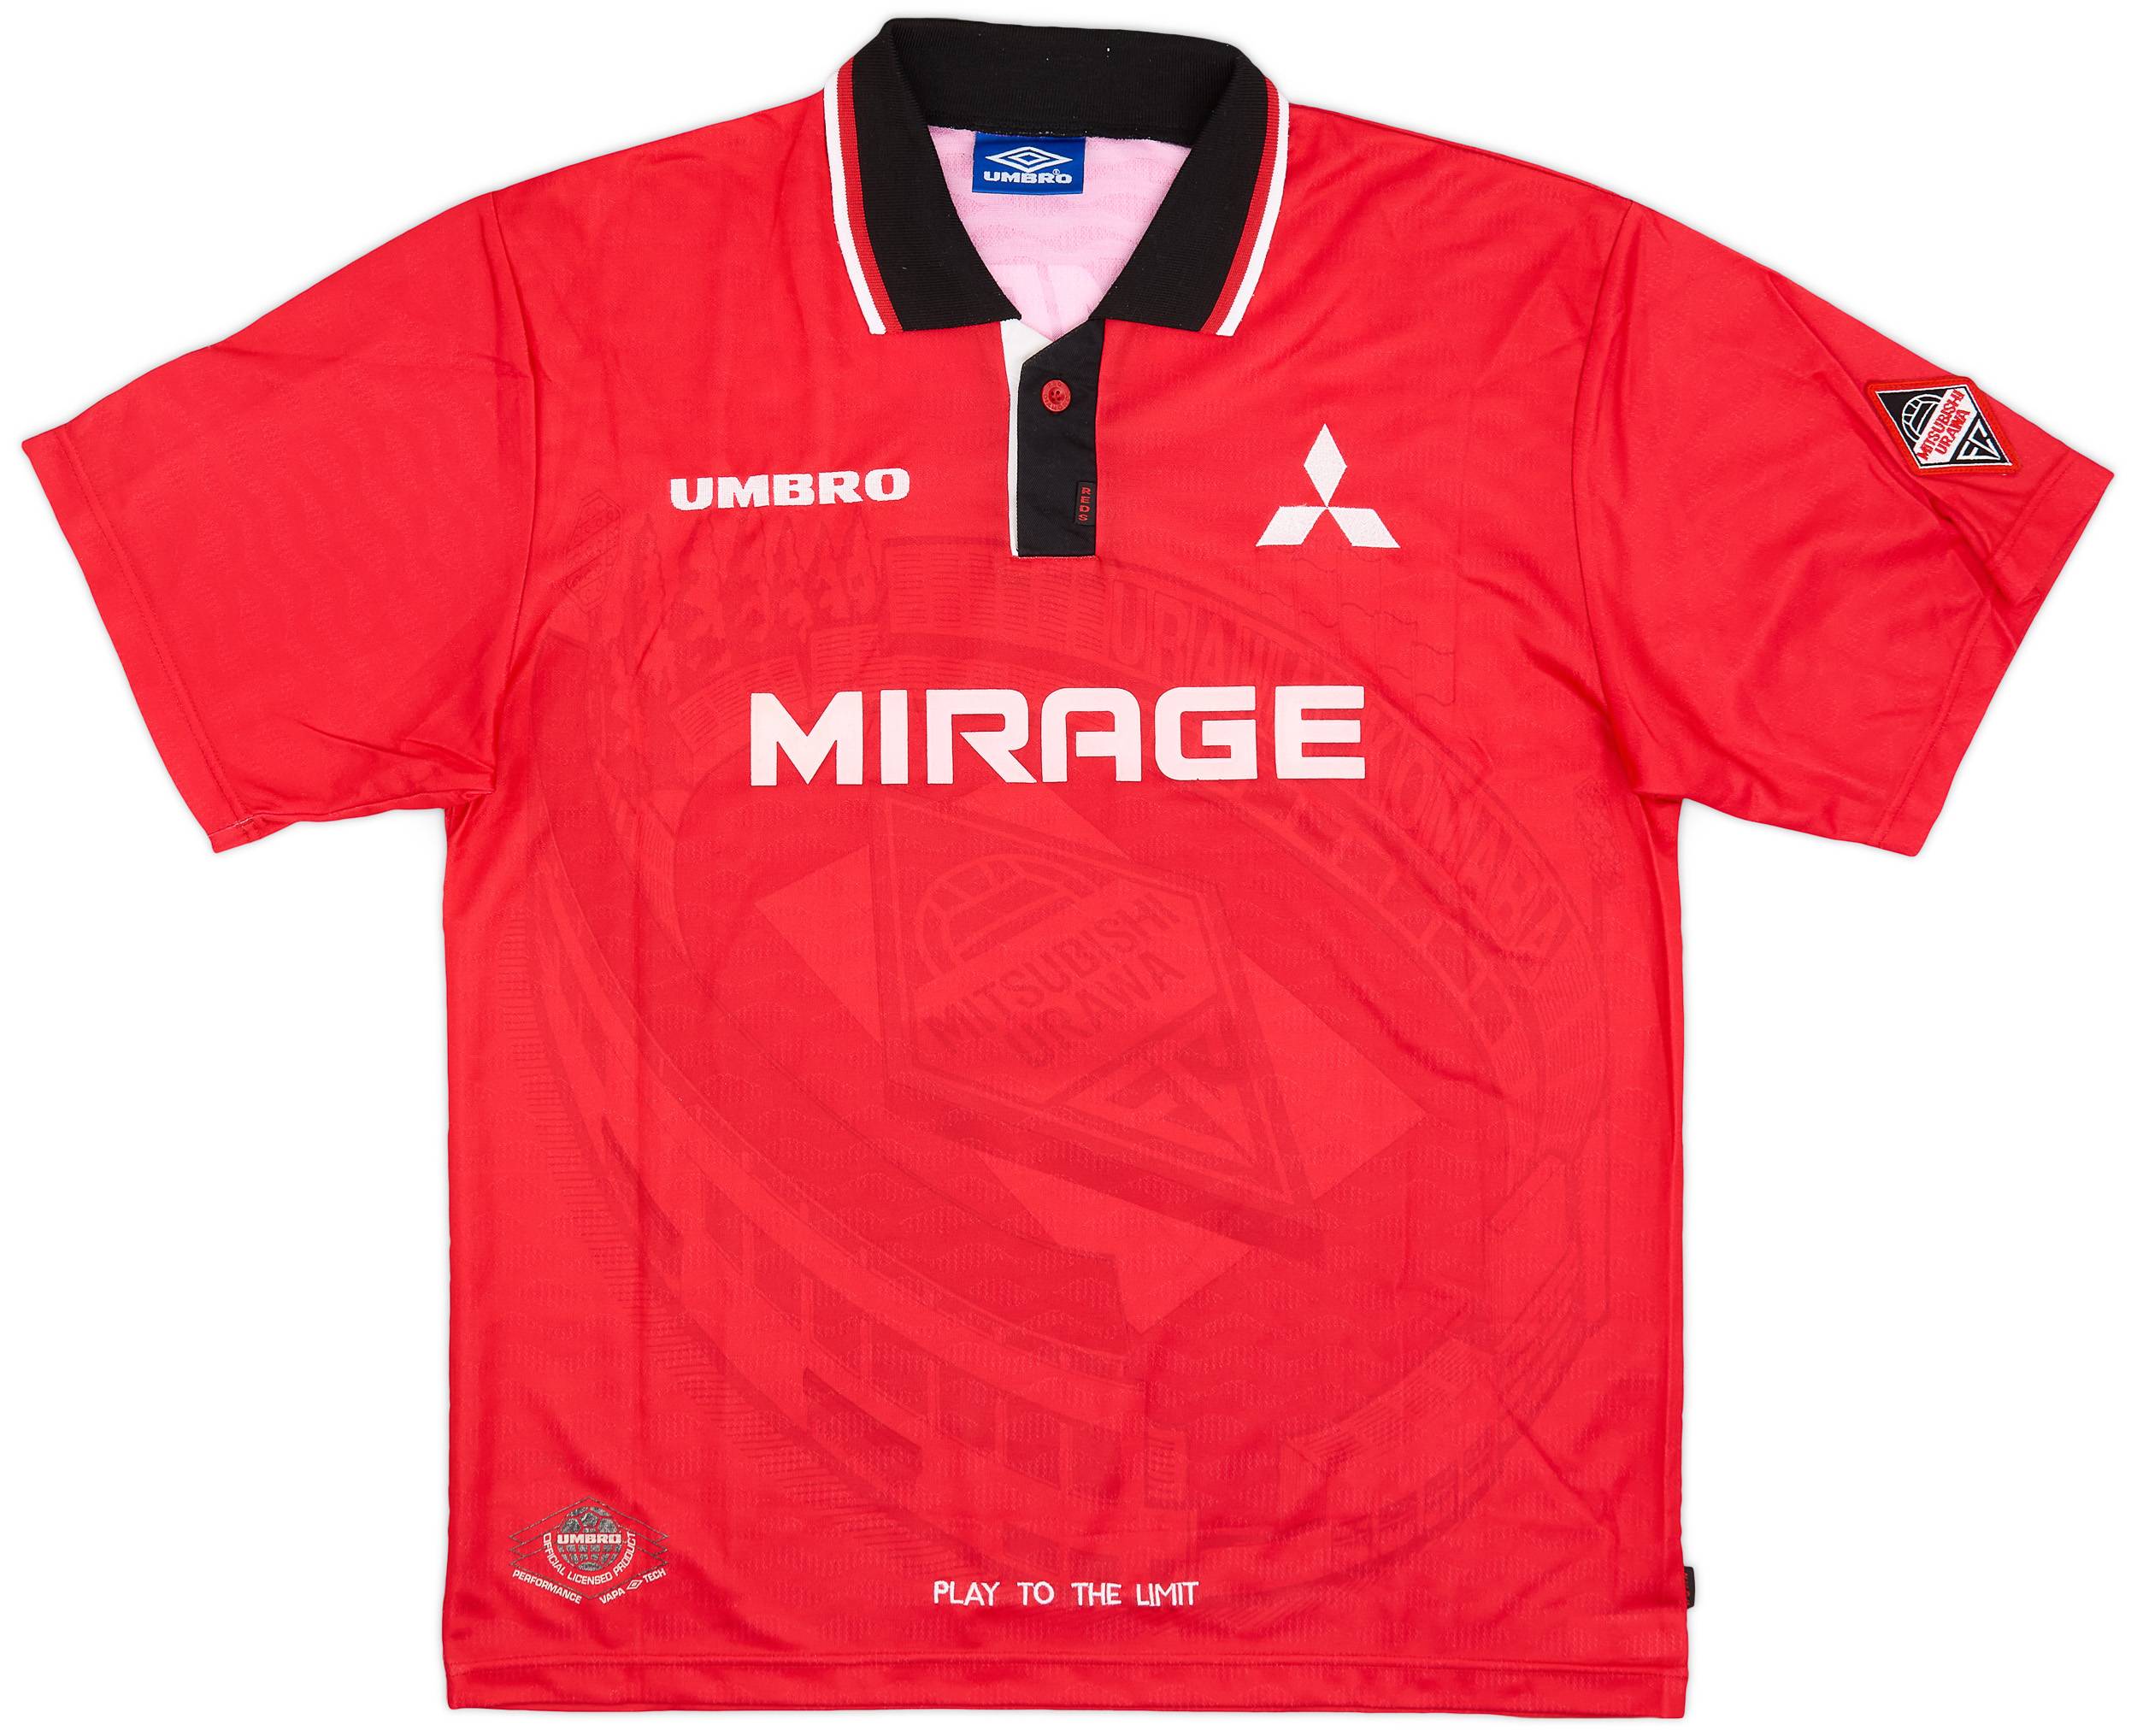 1997 Urawa Red Diamonds Home Shirt - 8/10 - (L)